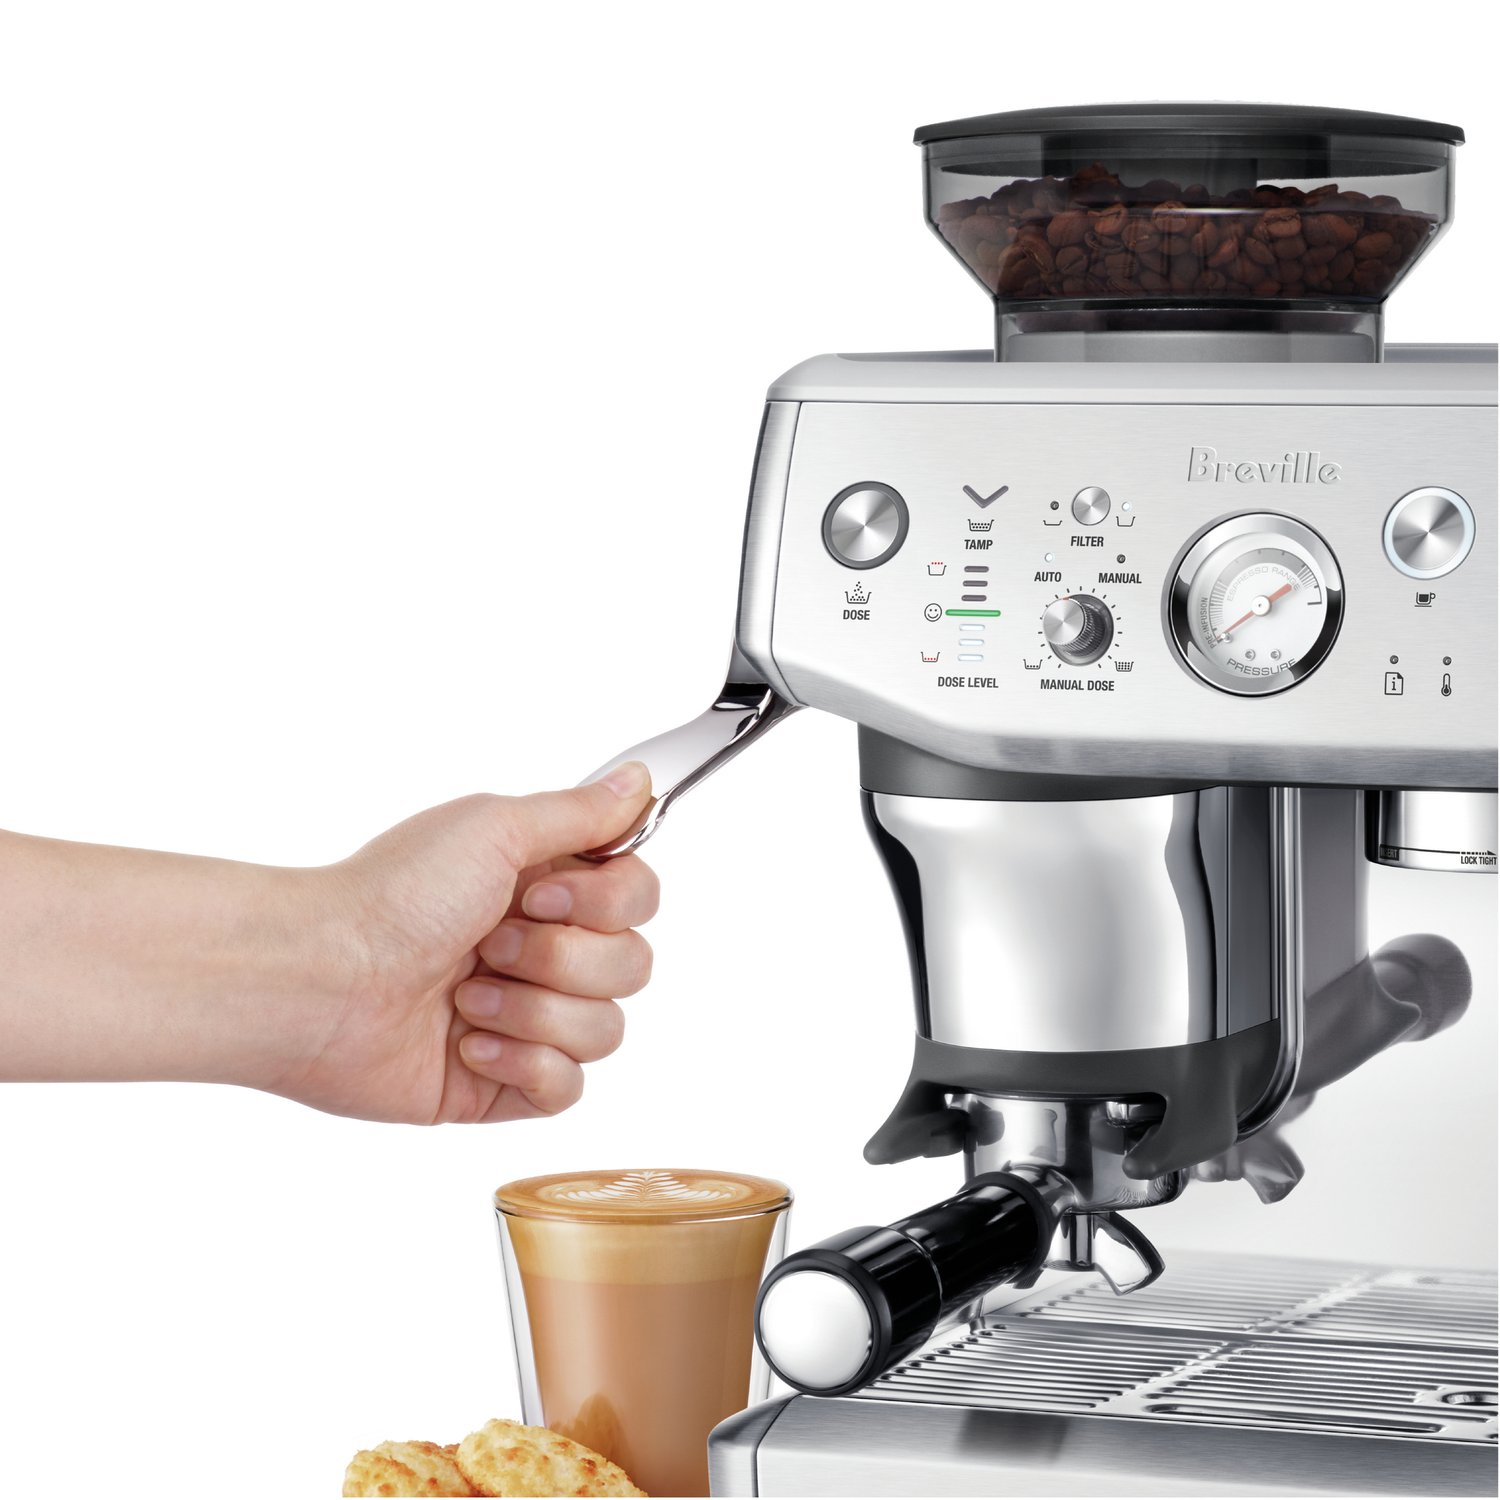 Comprar Cafetera espresso manual molinillo barista express impress